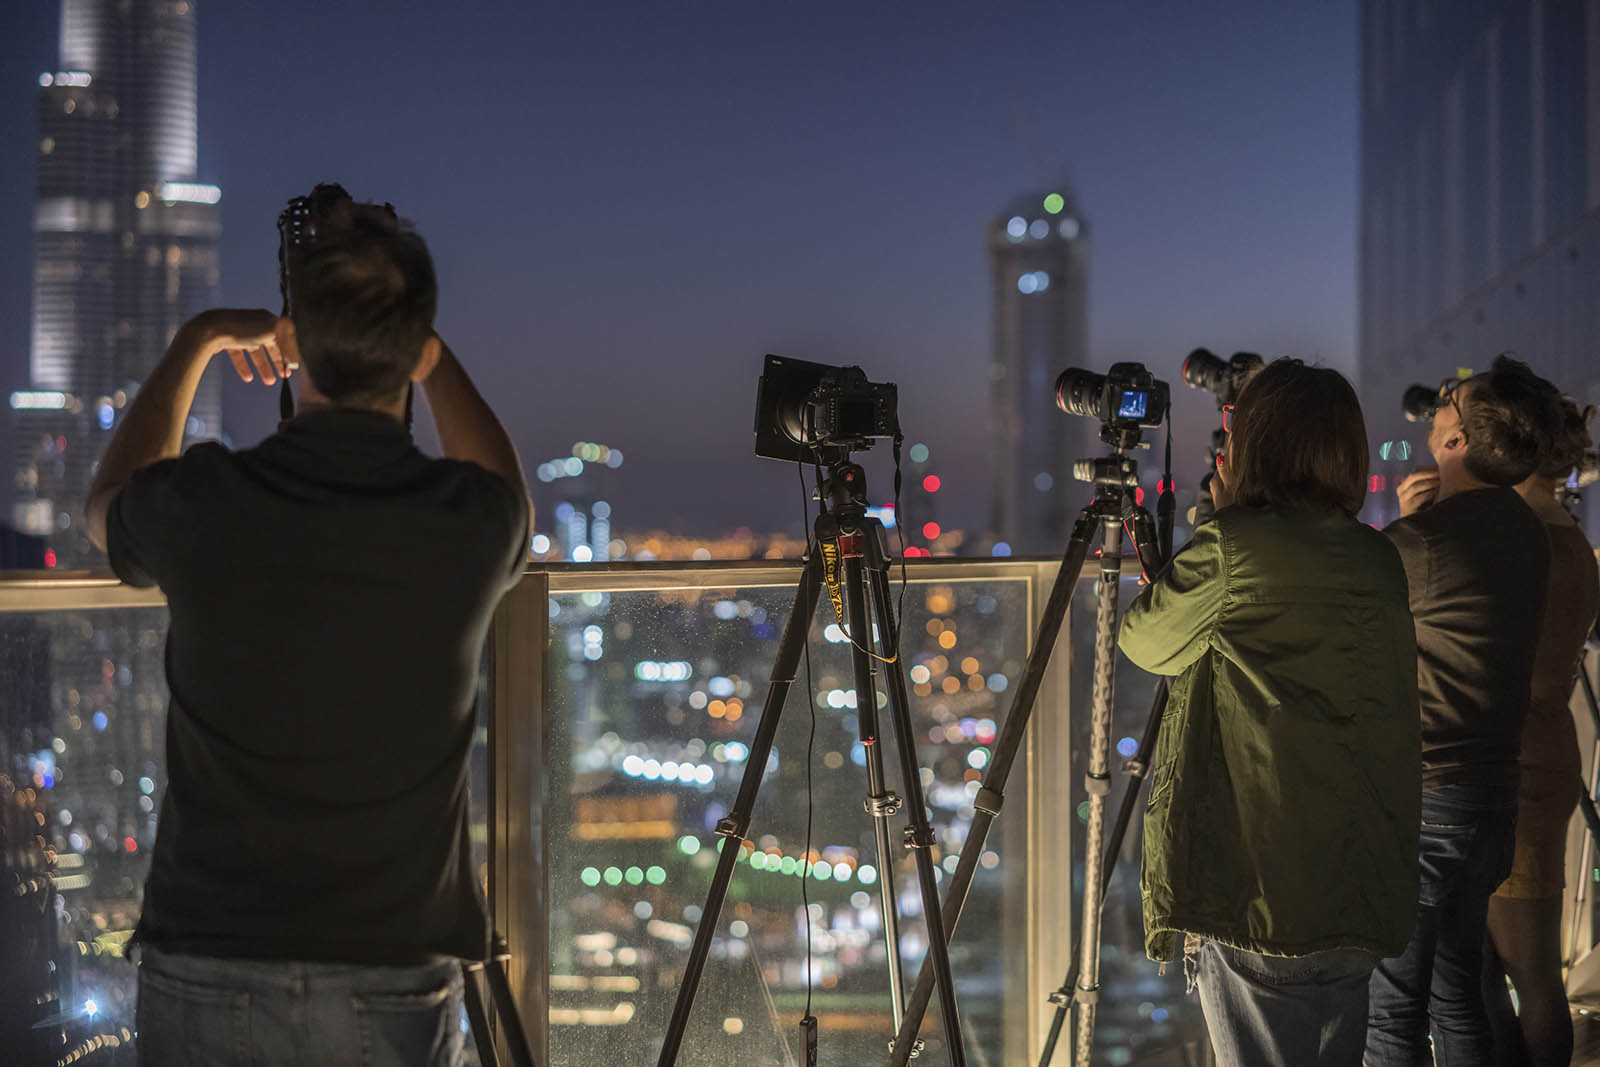 Dubai rooftop photography workshop